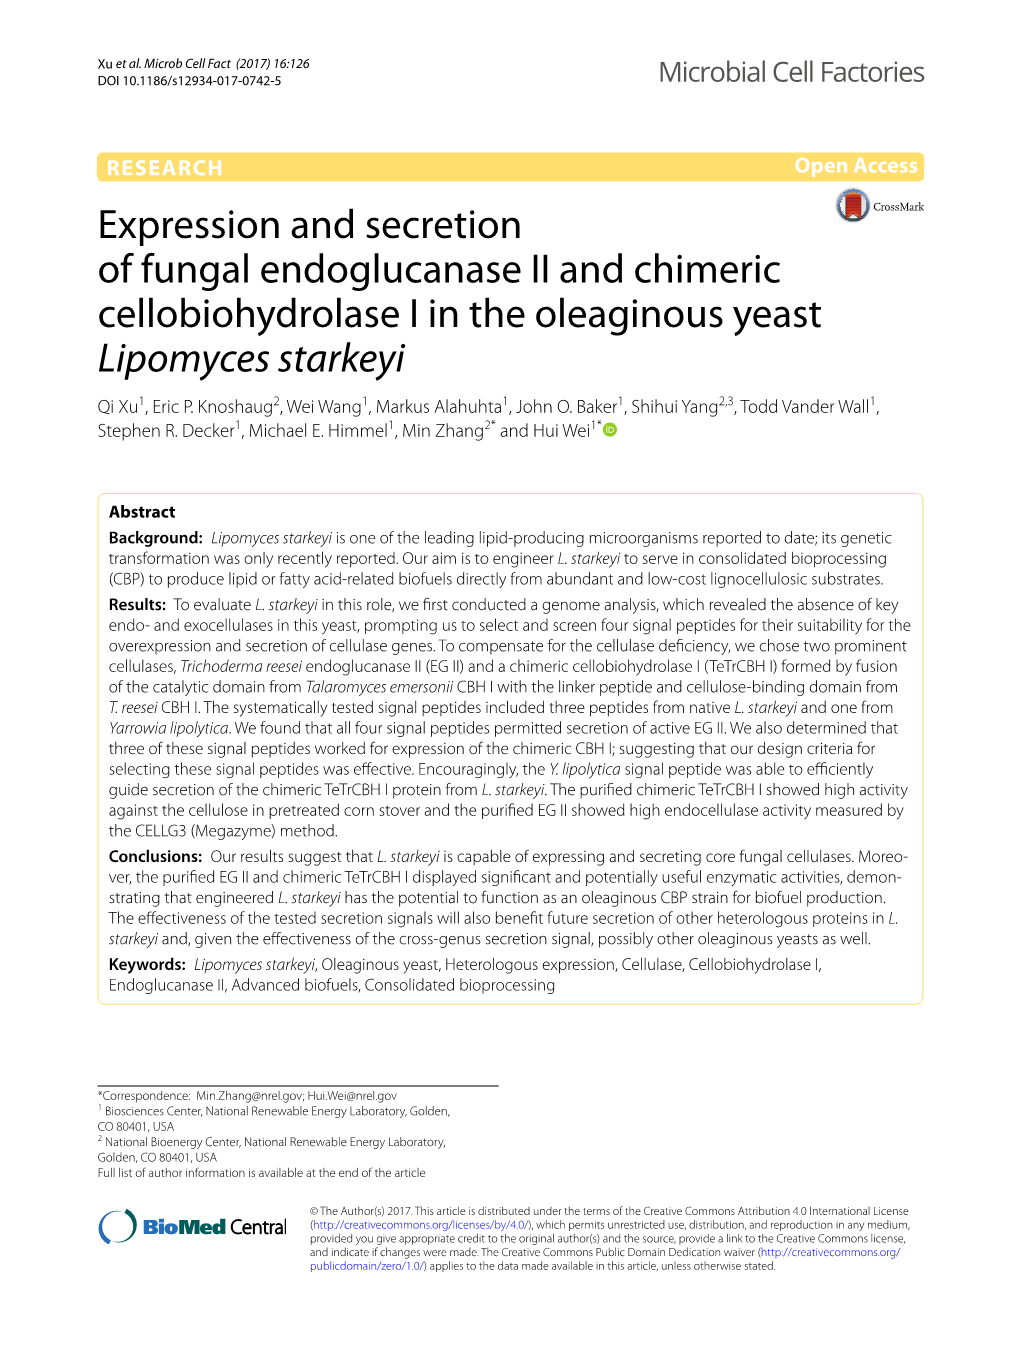 Expression and Secretion of Fungal Endoglucanase II and Chimeric Cellobiohydrolase I in the Oleaginous Yeast Lipomyces Starkeyi Qi Xu1, Eric P